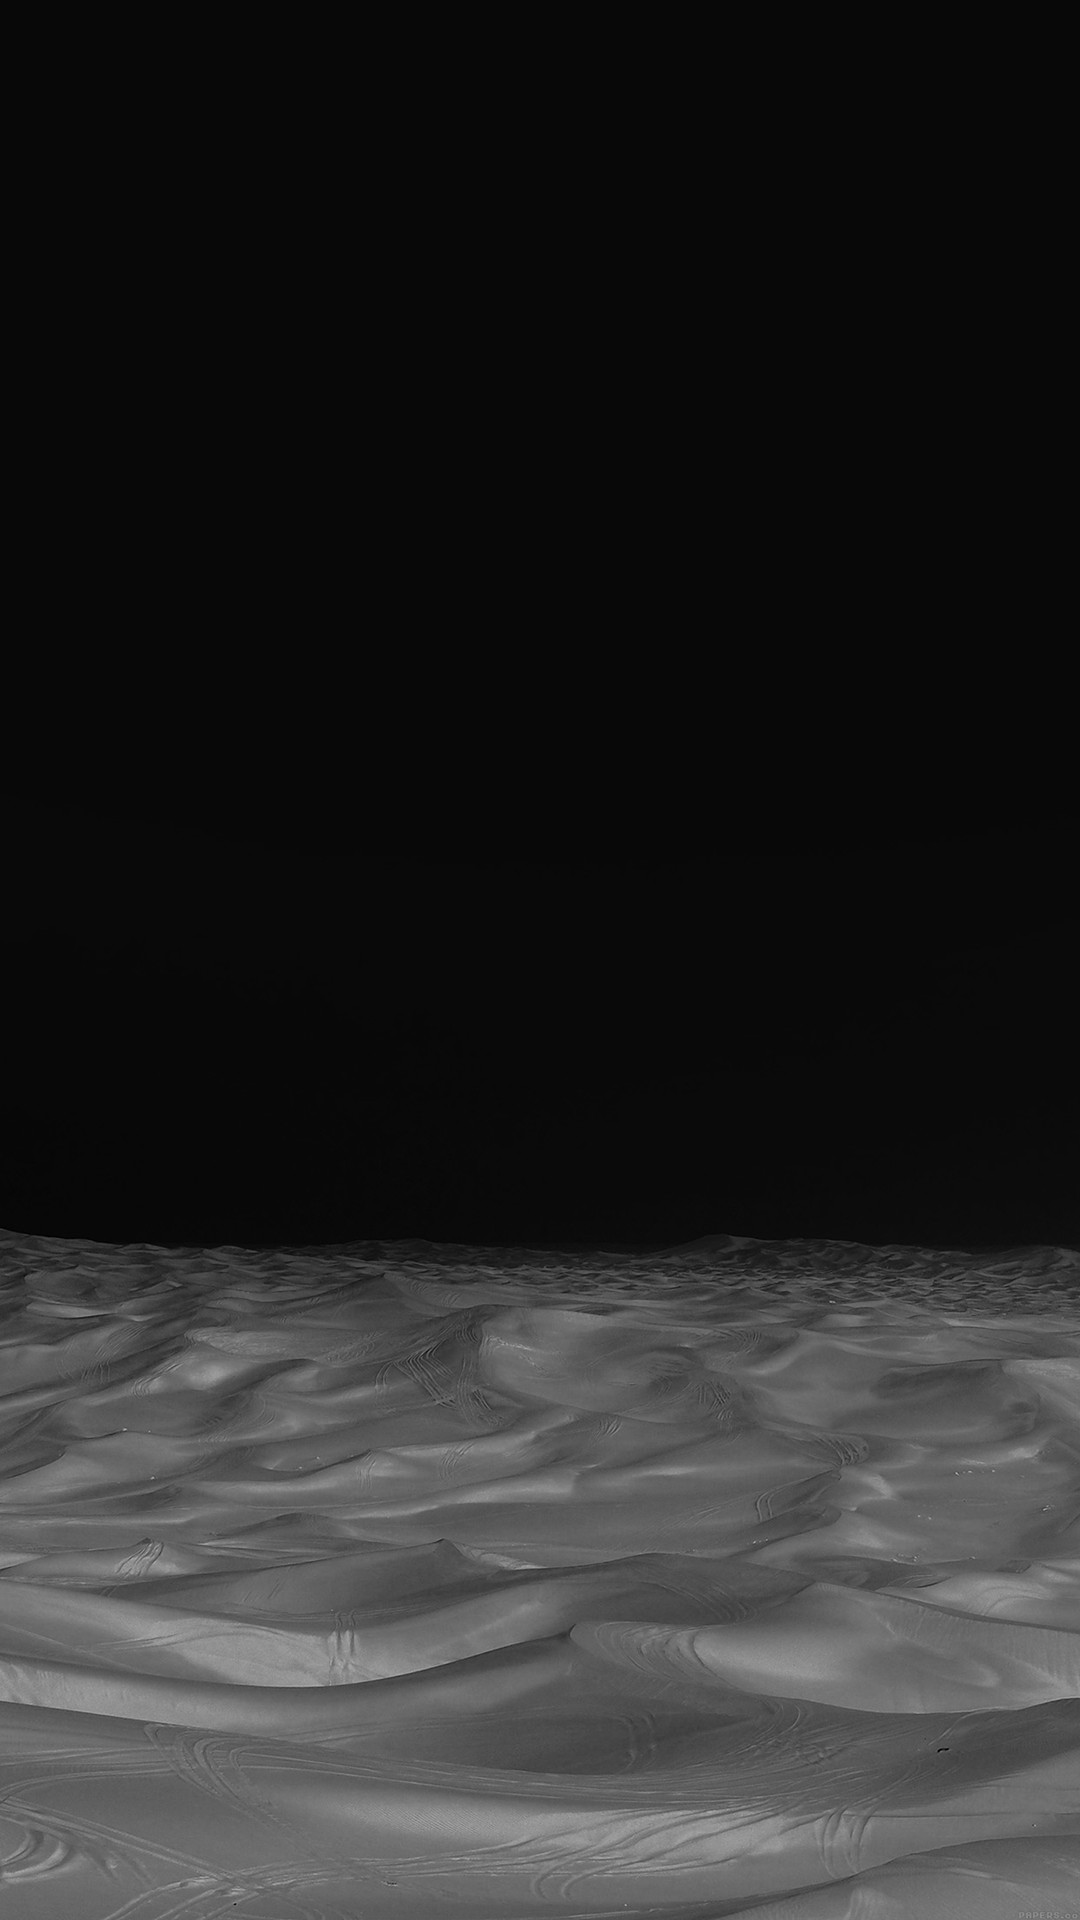 1080x1920 Desert Minimal Dark Black Nature Sky Earth iPhone 8 wallpaper